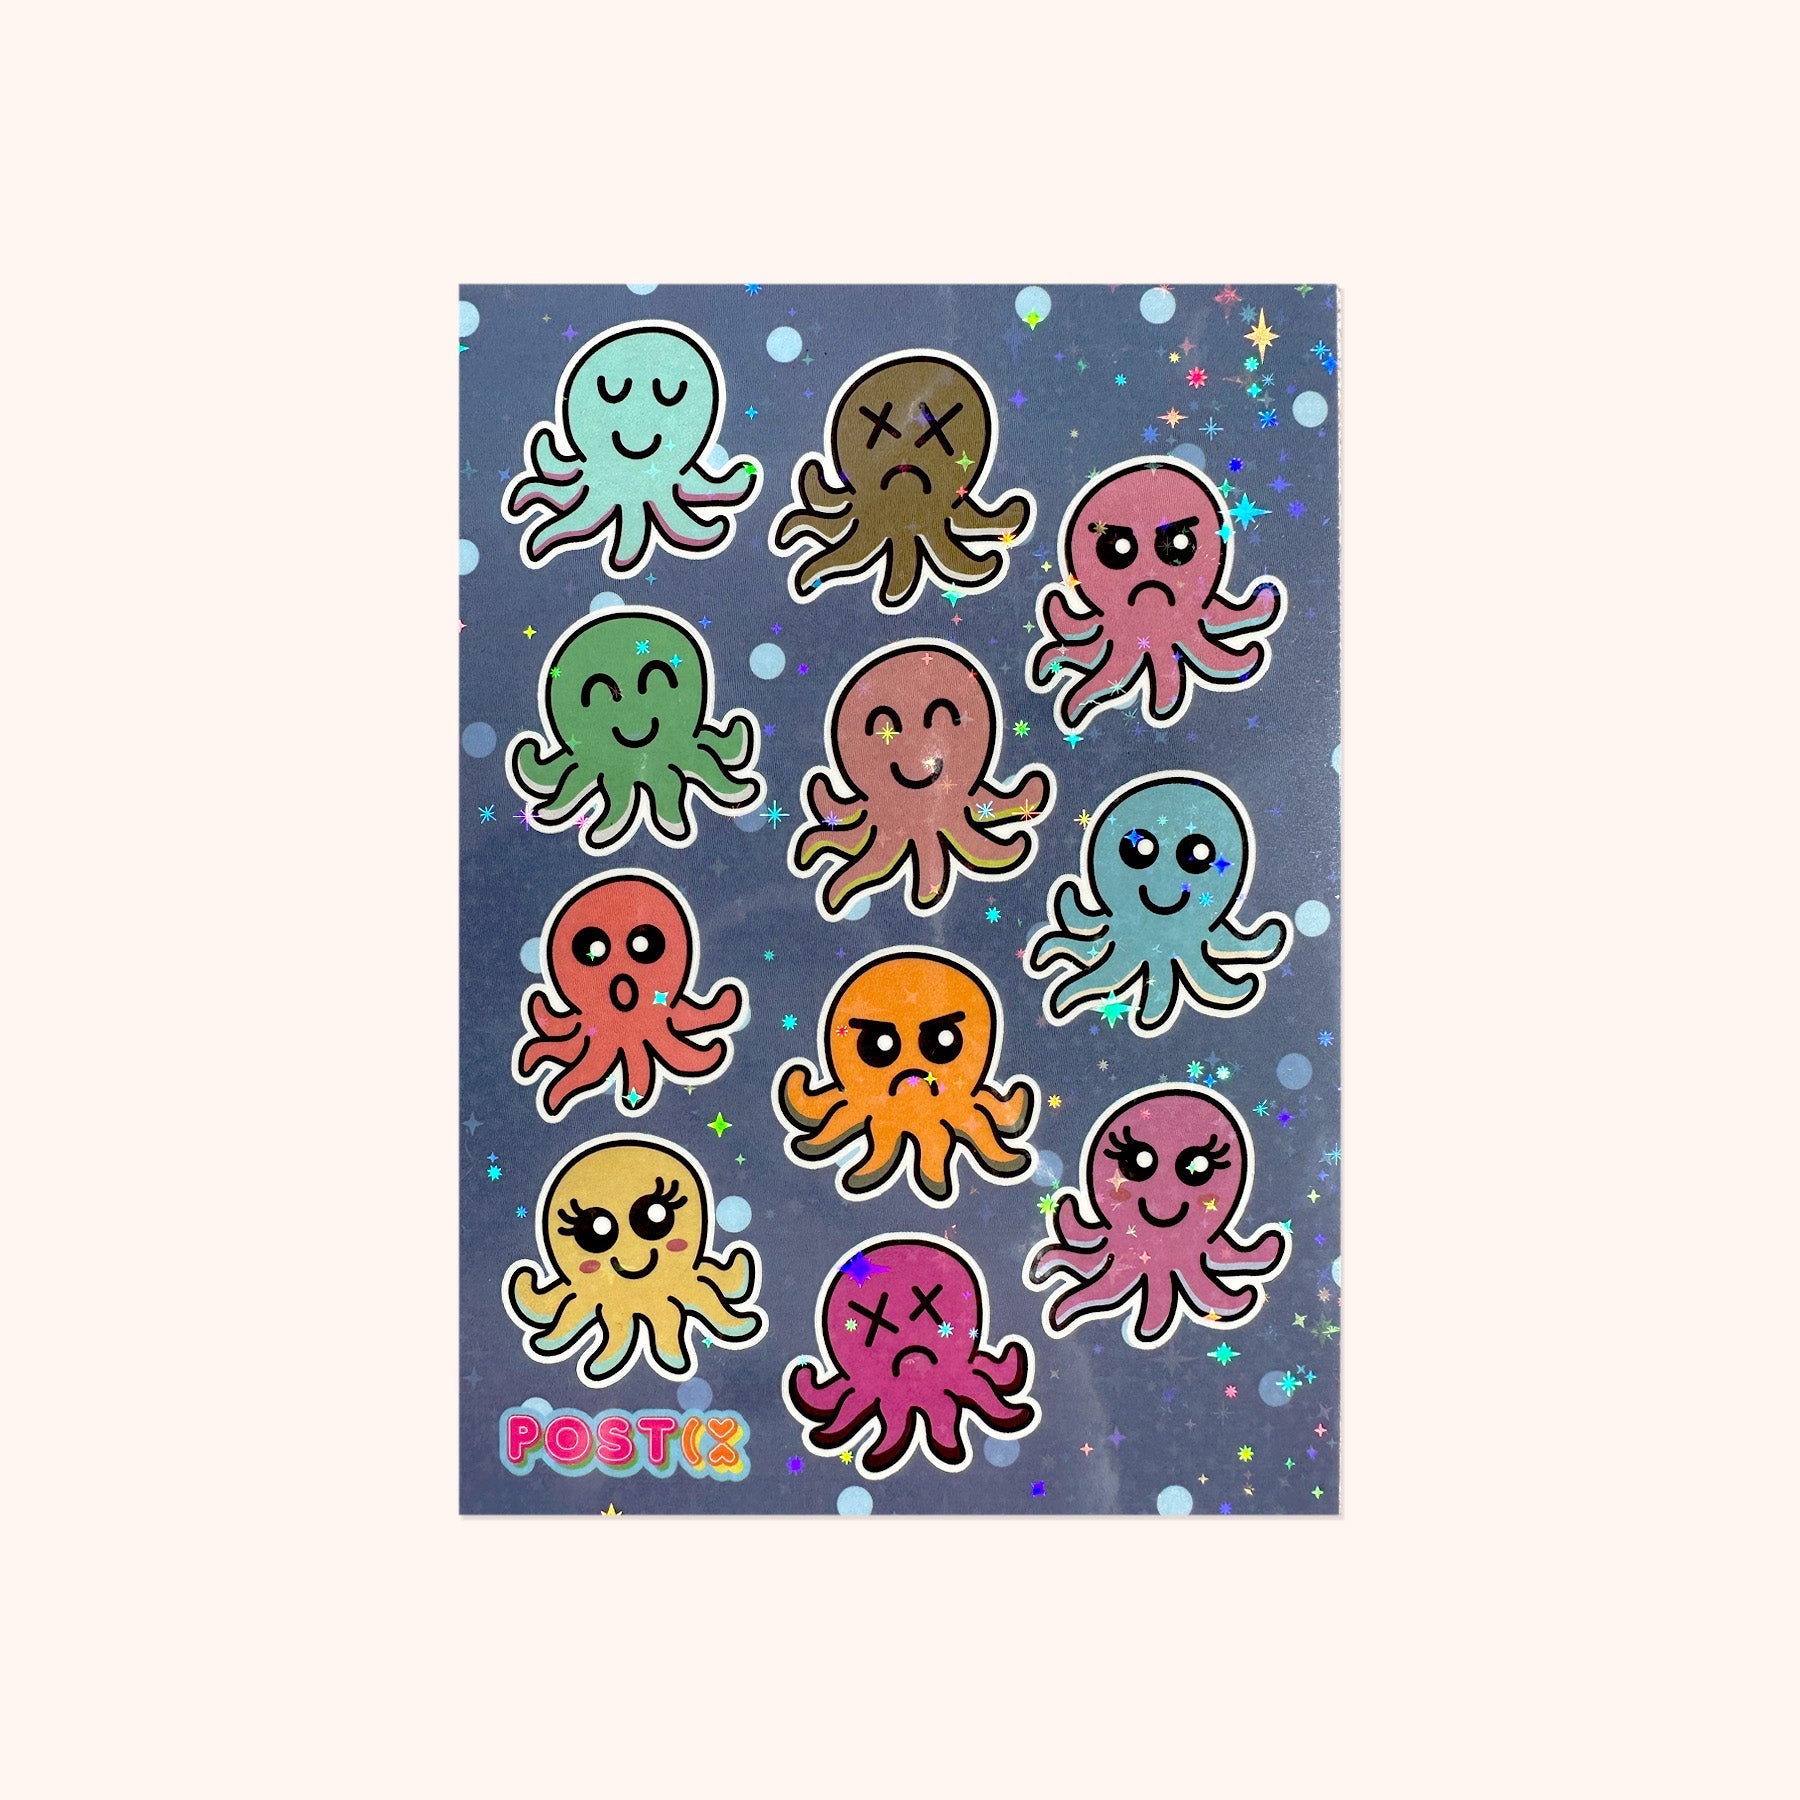 Octopus Moods Hologram Sticker Sheet